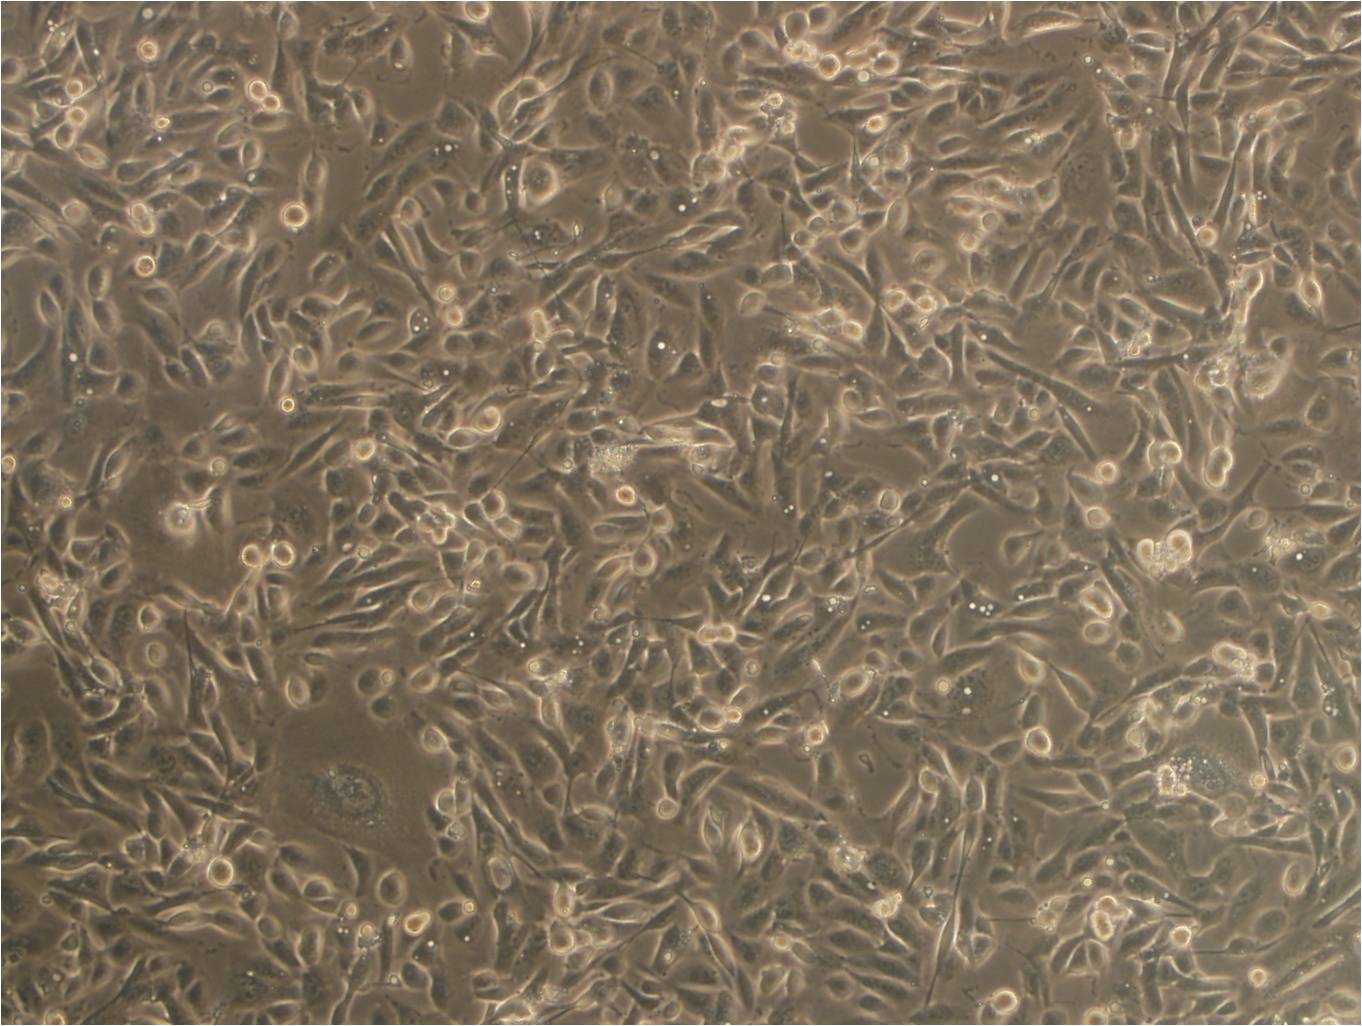 OC 316 epithelioid cells人卵巢癌细胞系,OC 316 epithelioid cells